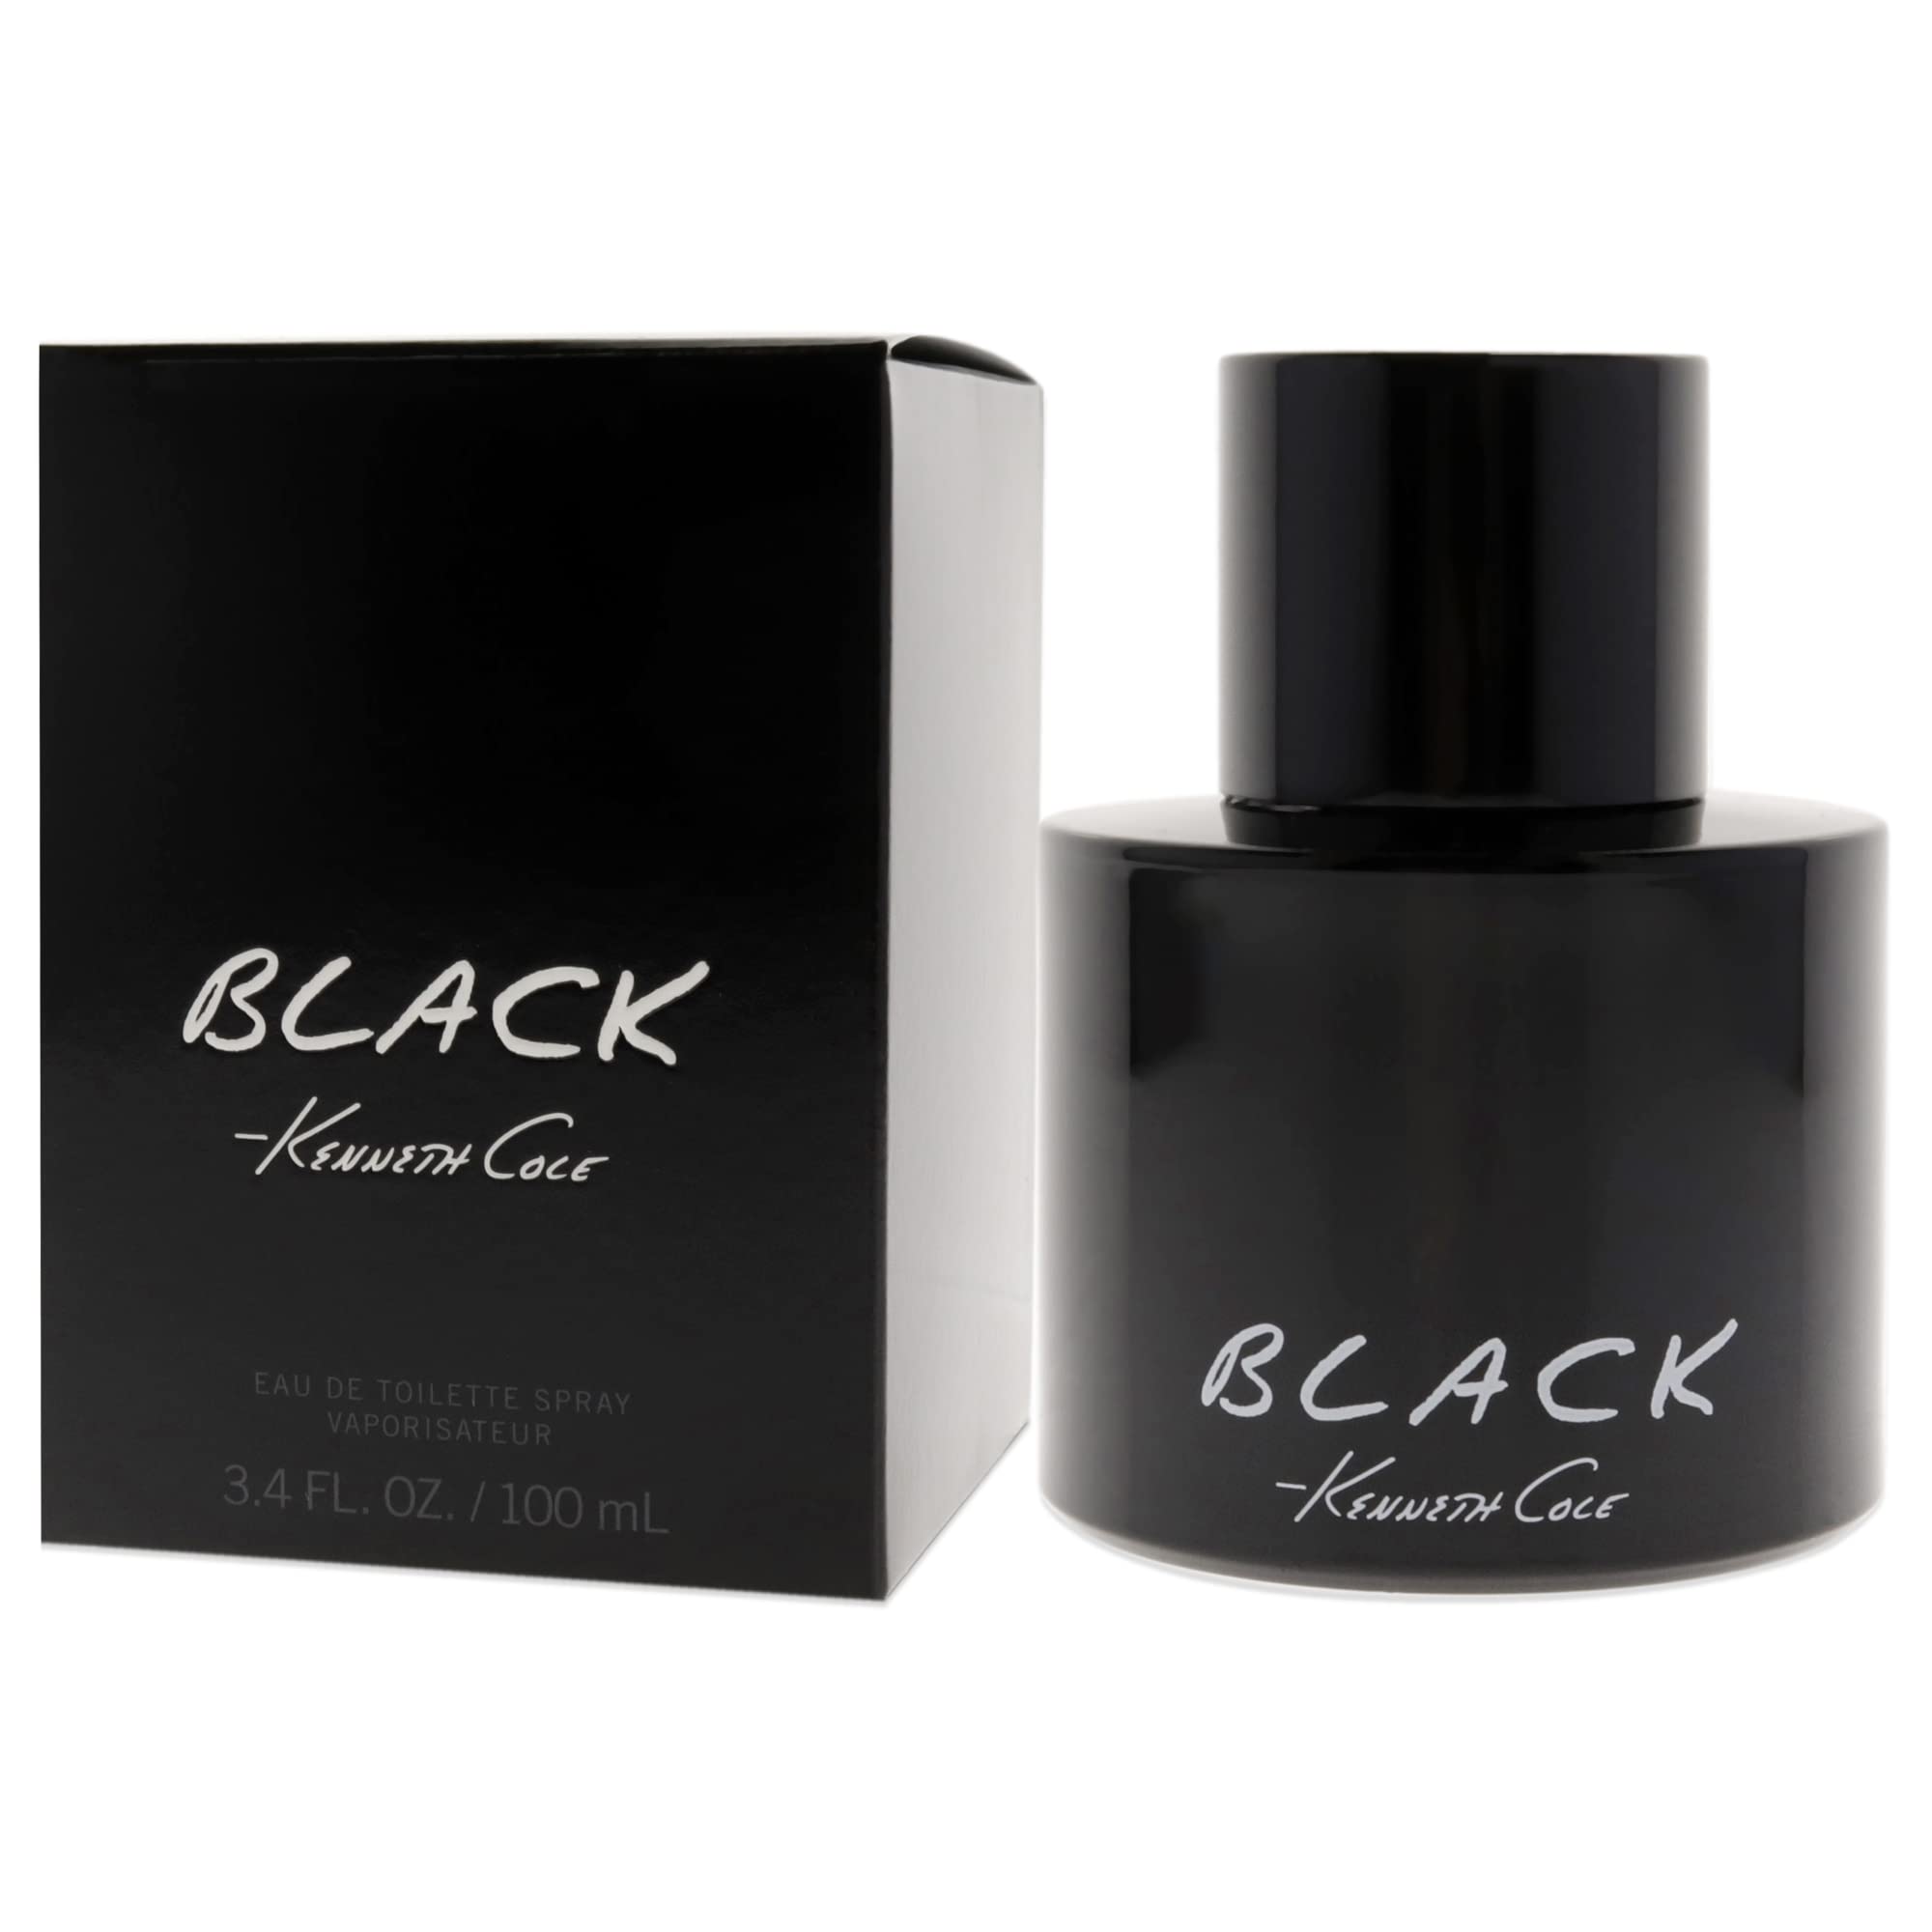 Kenneth Cole Black EDT For Men | My Perfume Shop Australia